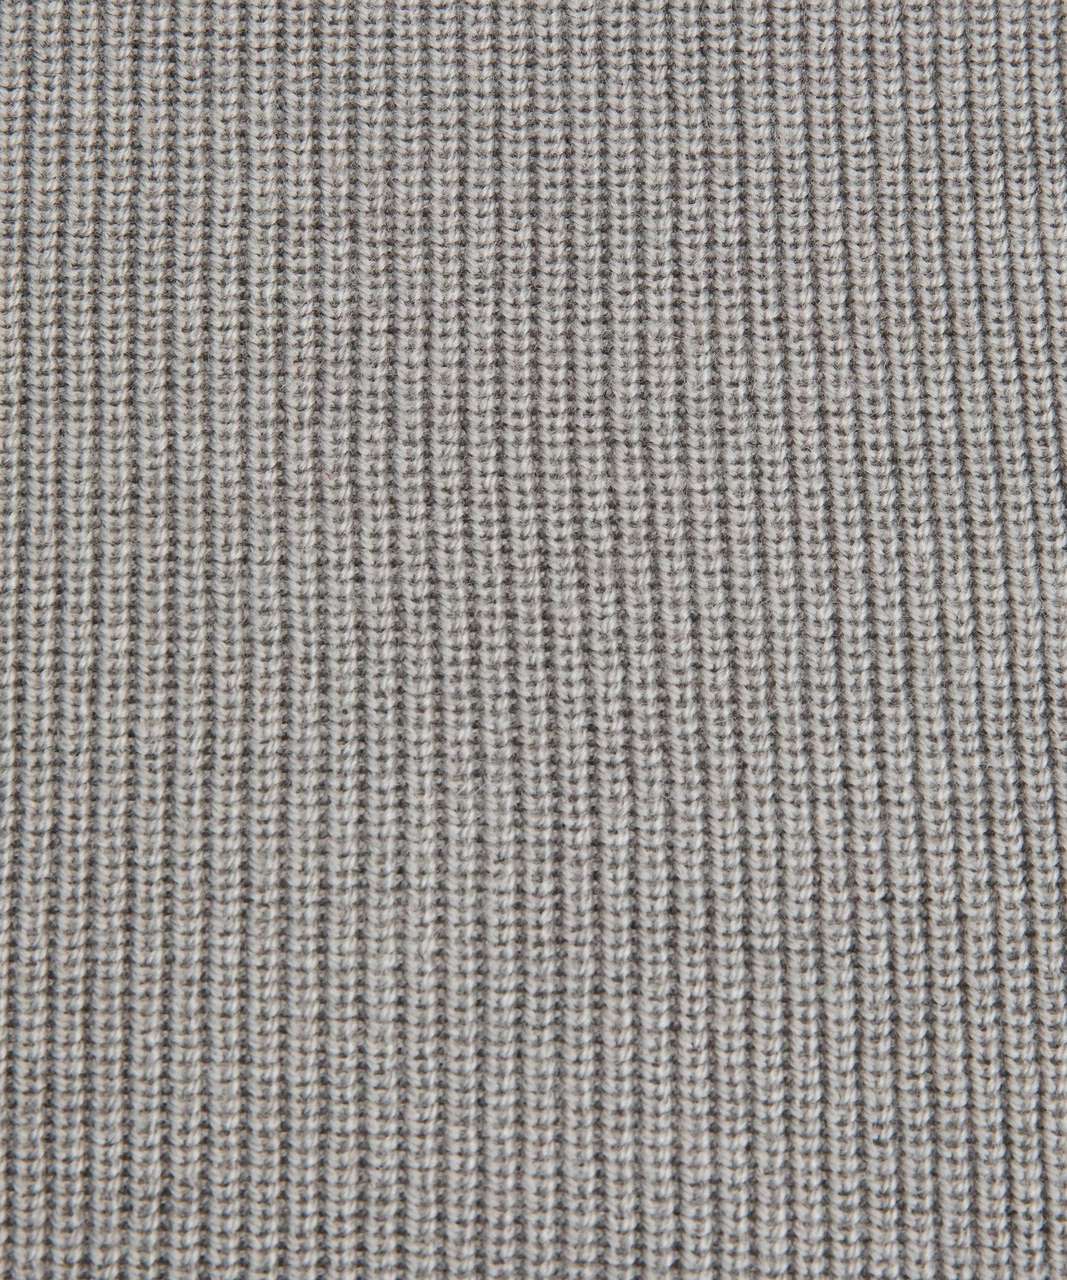 Lululemon Merino Wool-Blend Knit Dress - Heathered Gull Grey